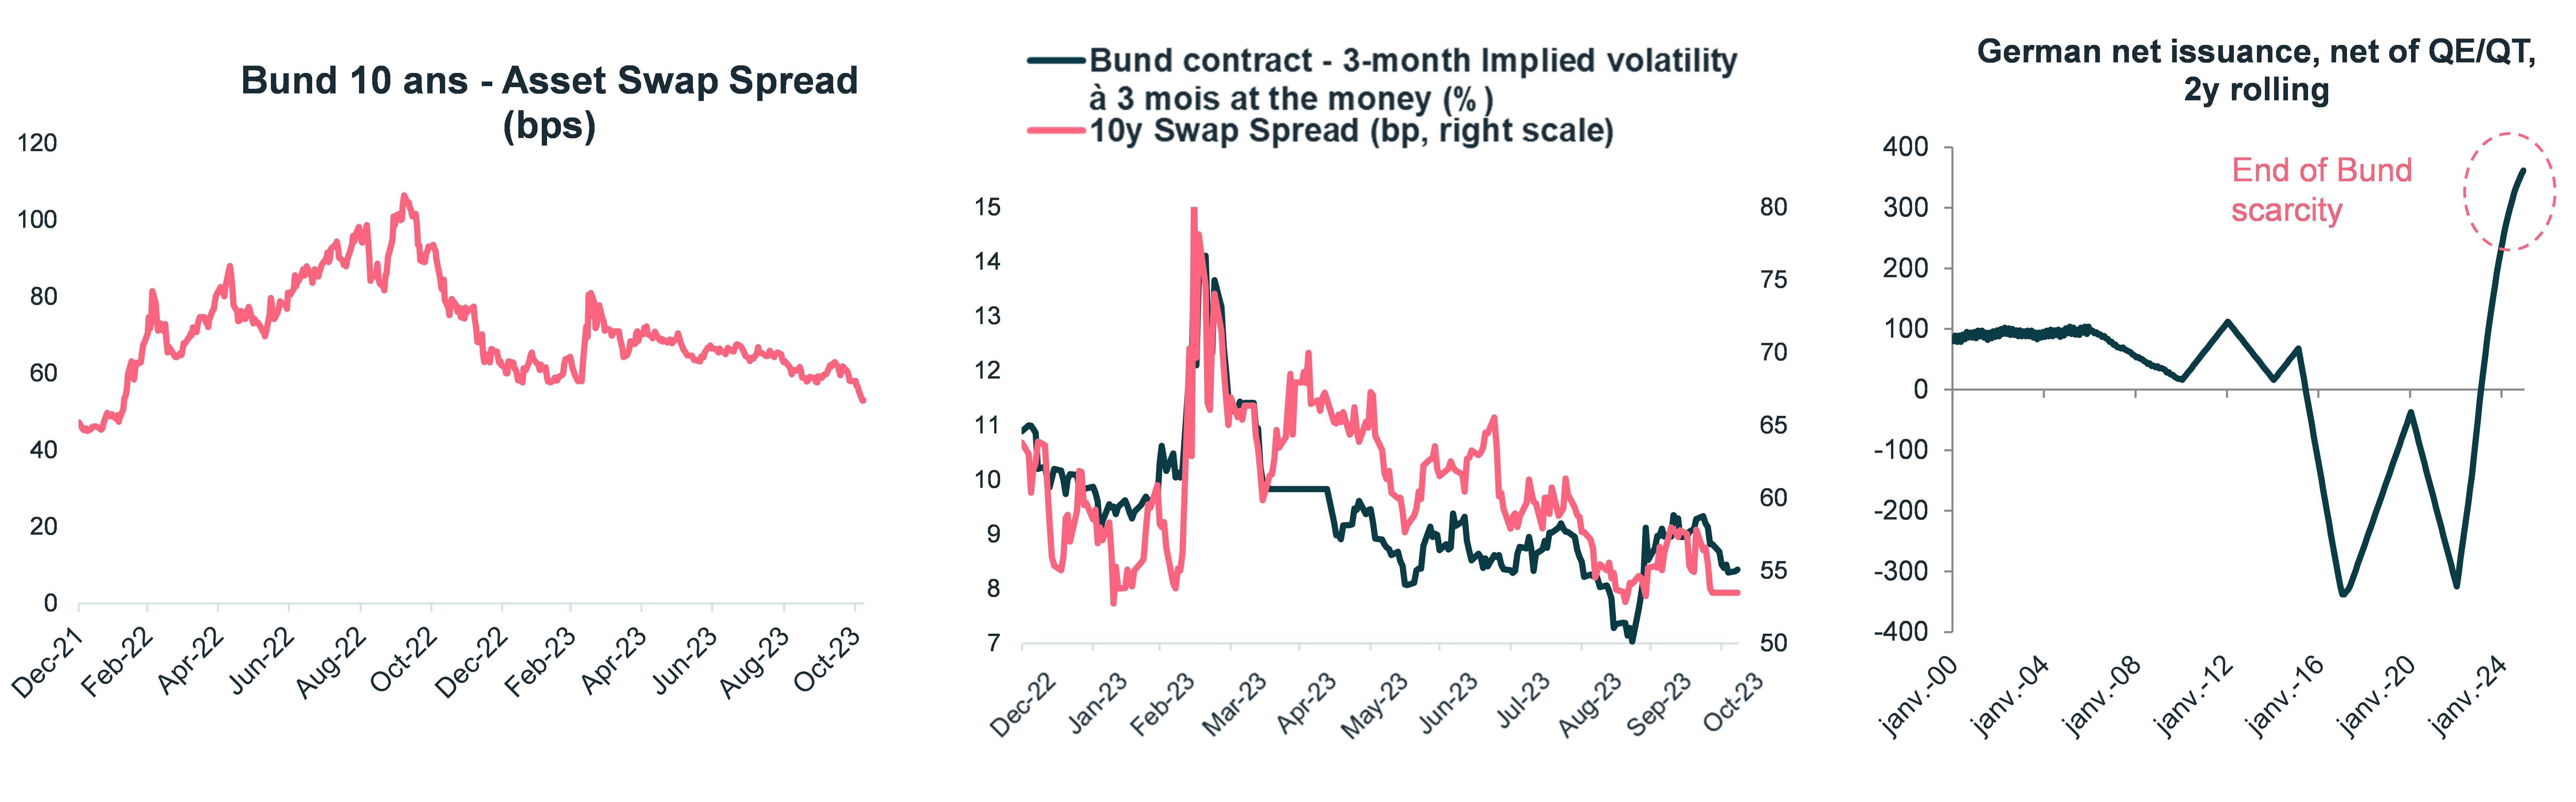 10-year-bunds-asset-swap-spread-bps